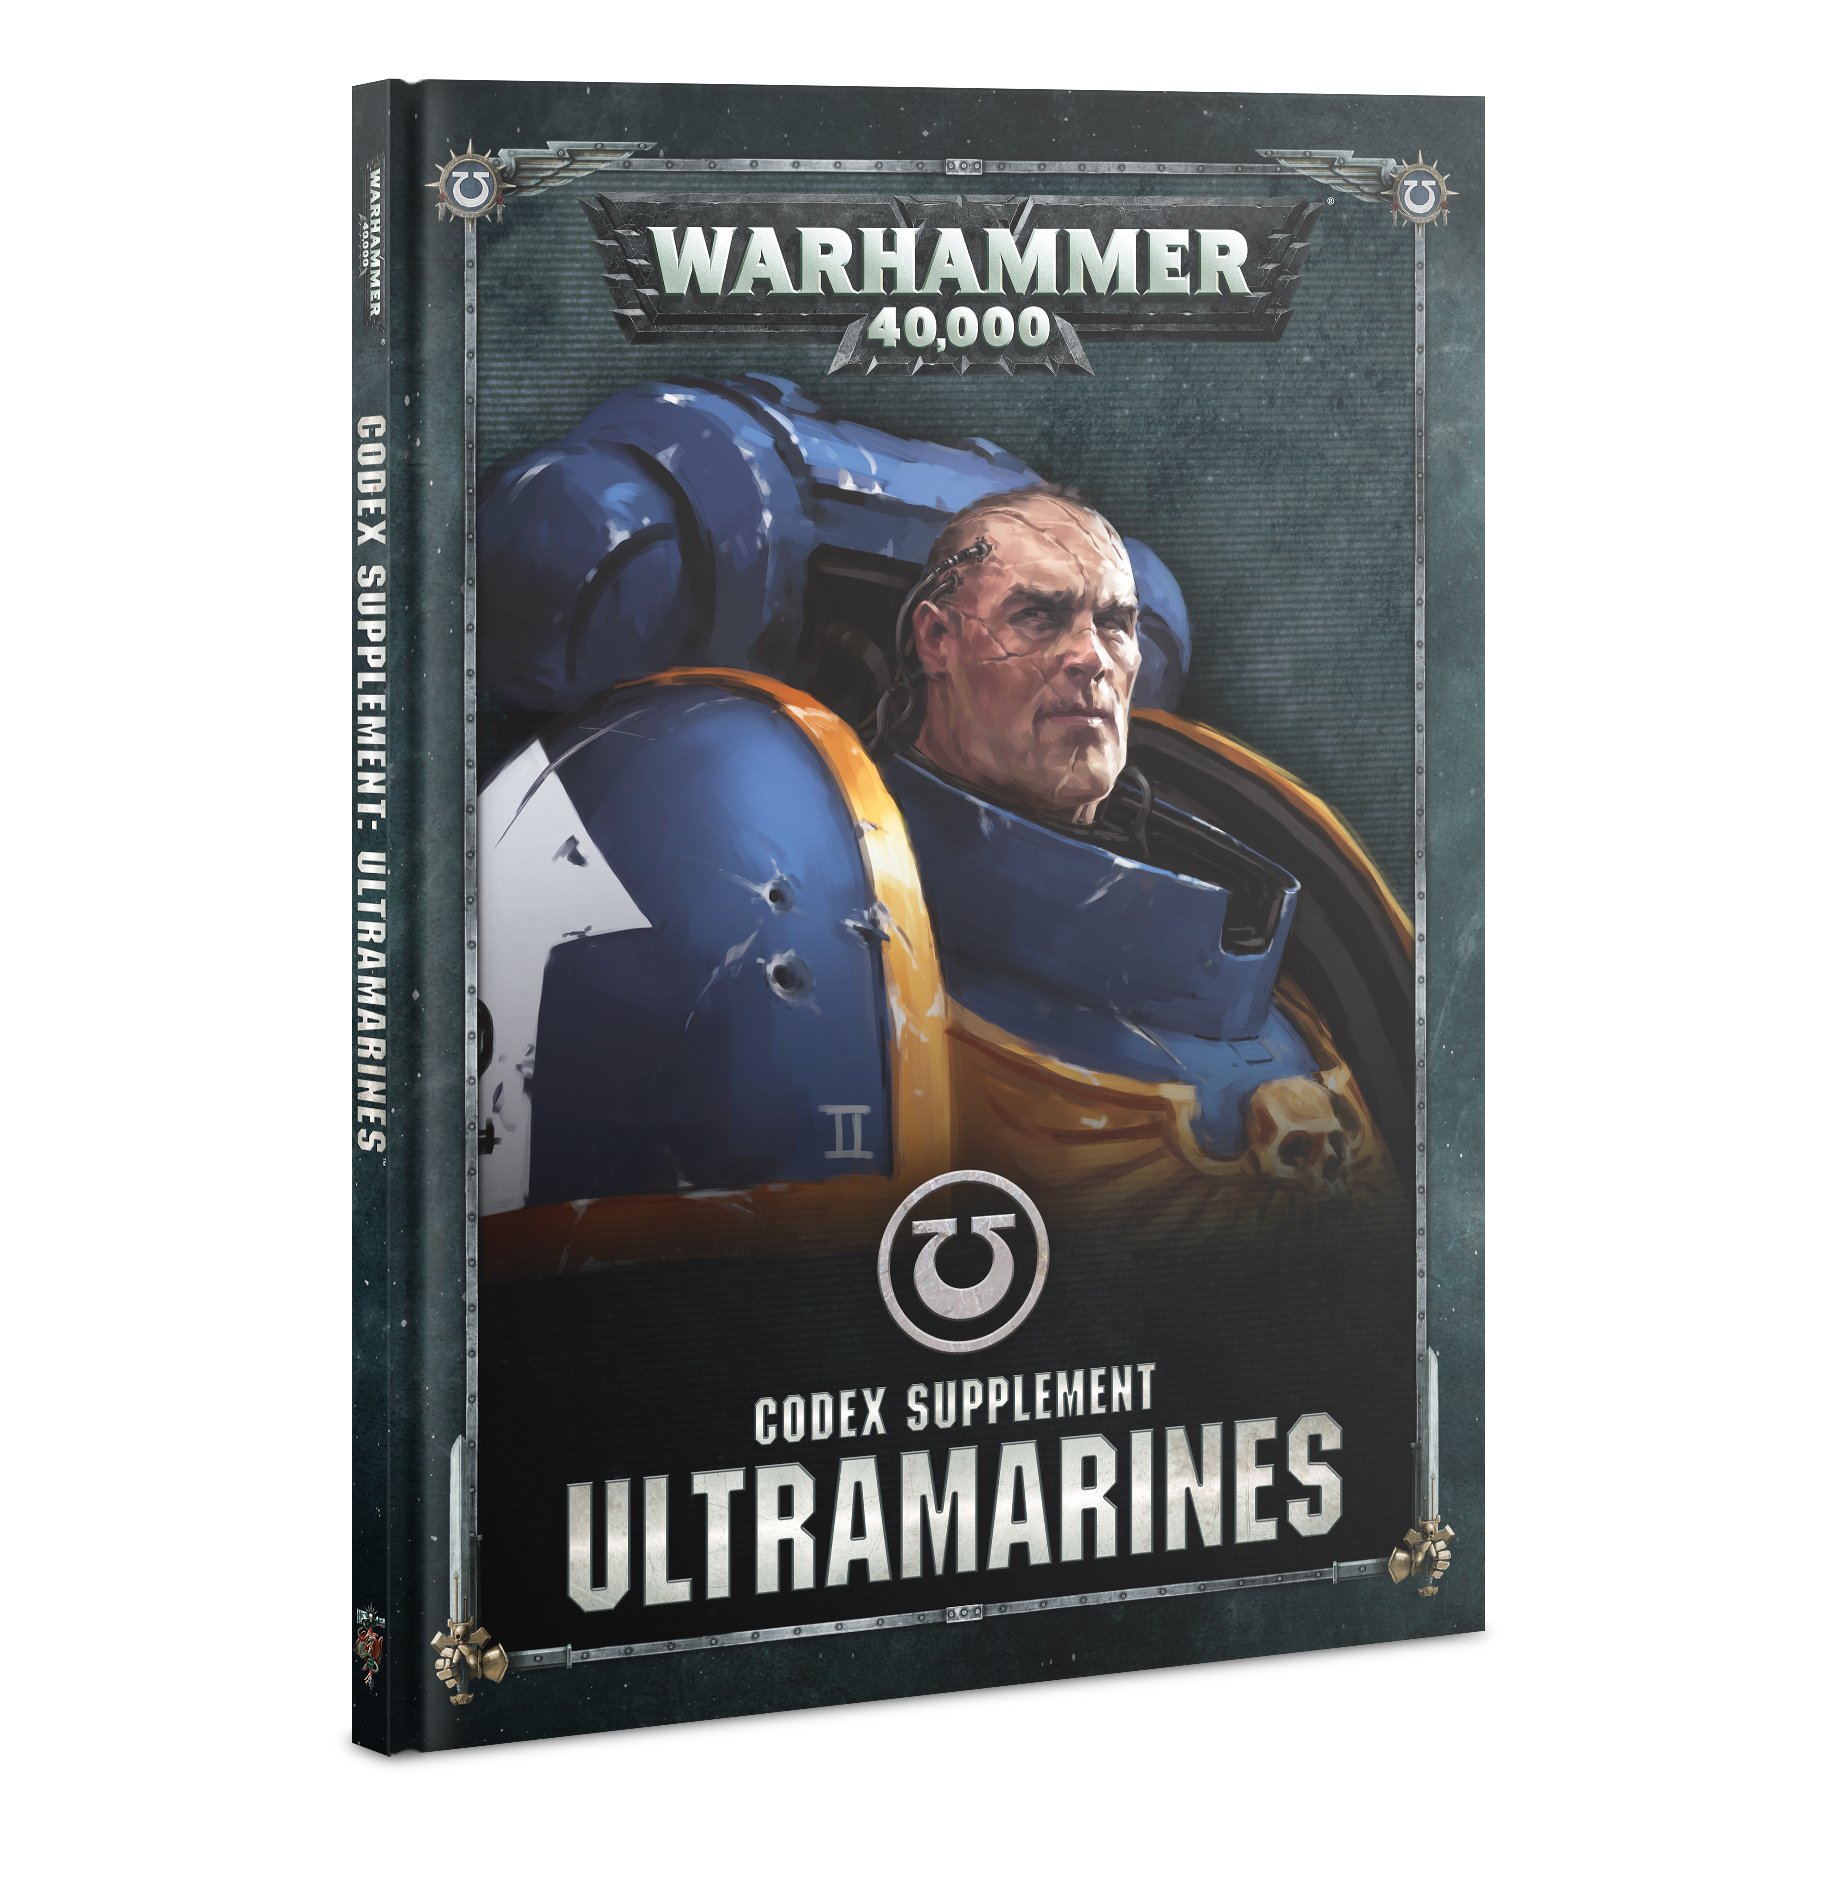 Warhammer 40K Ultramarines Patch 3 3/4 inches wide 